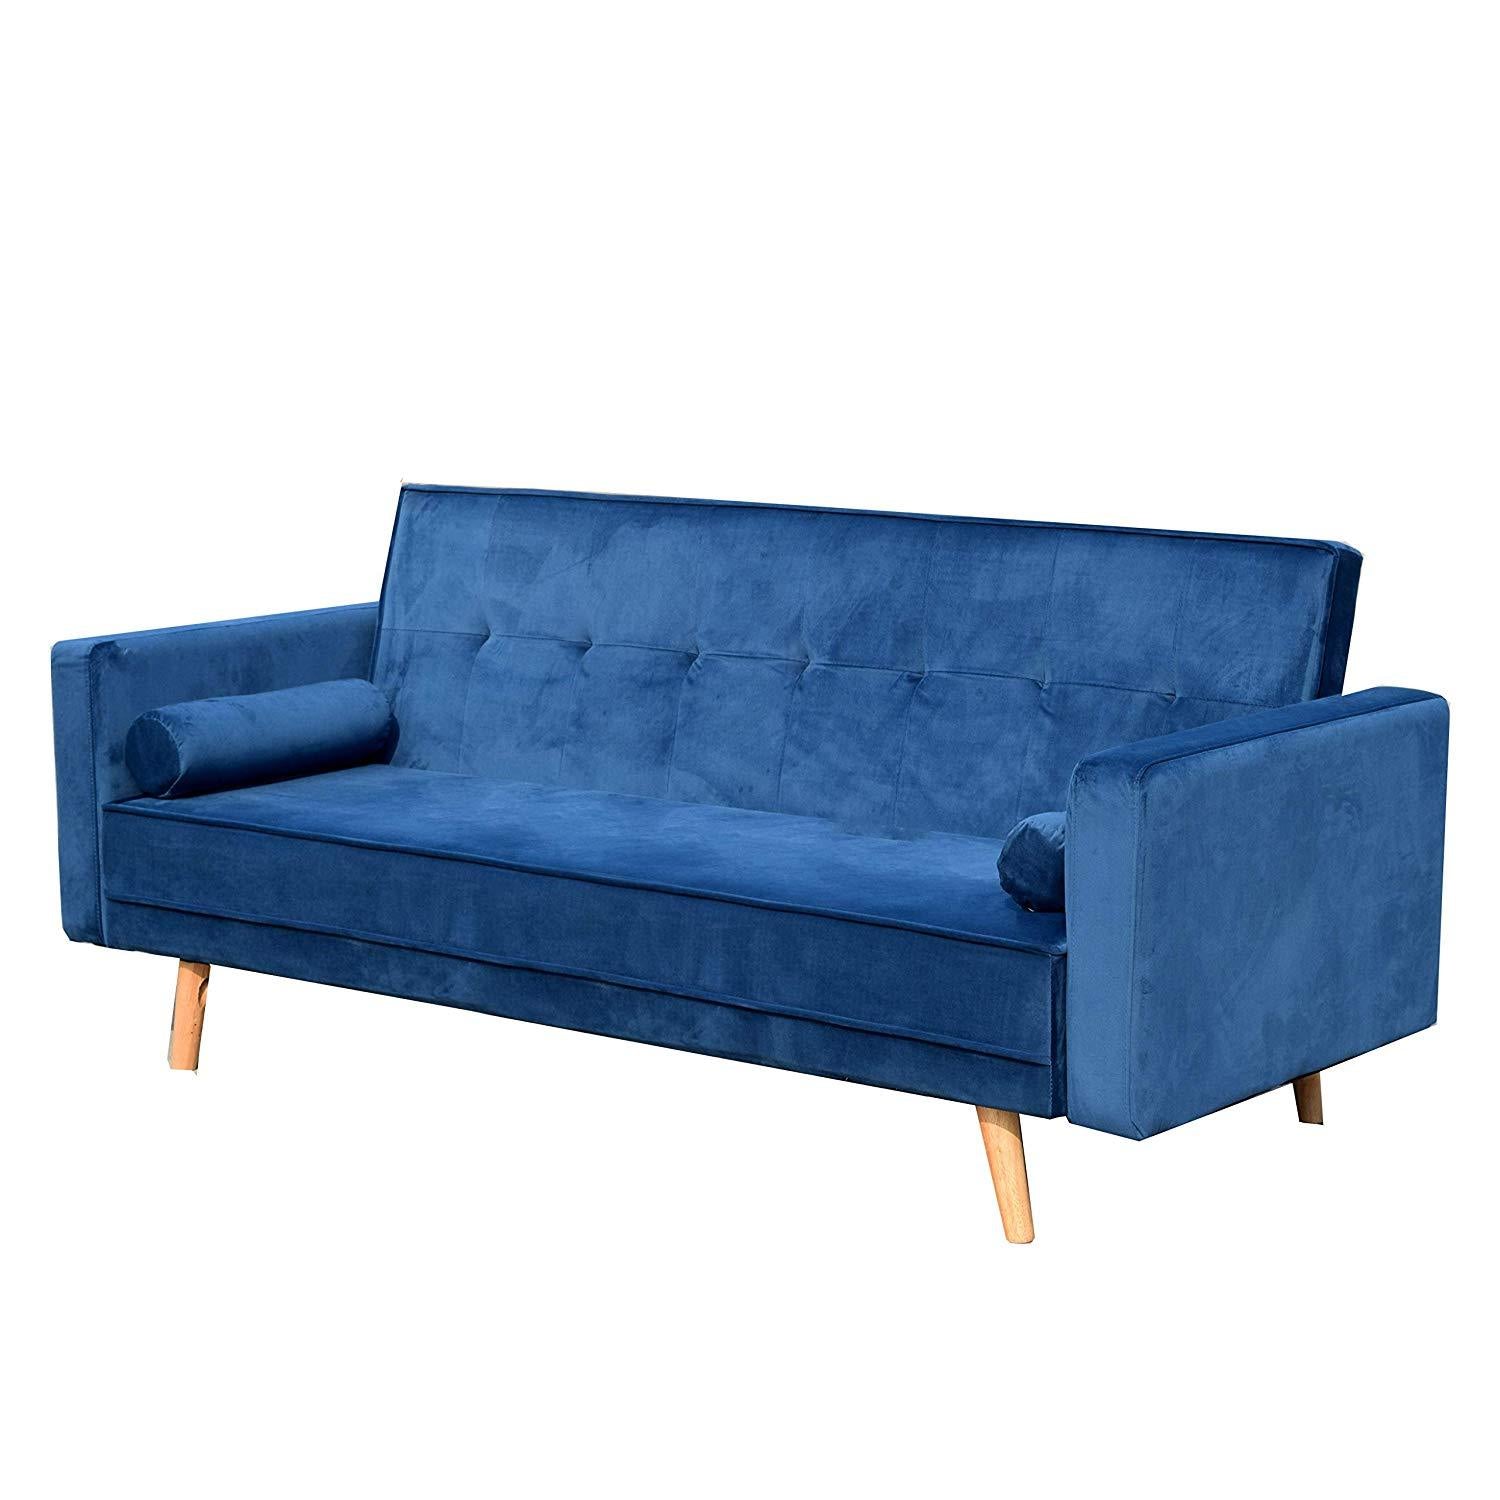 NORA 3-Seater Fabric Sofa Bed Sleeper Sofa with Cushions, Navy Blue Velvet